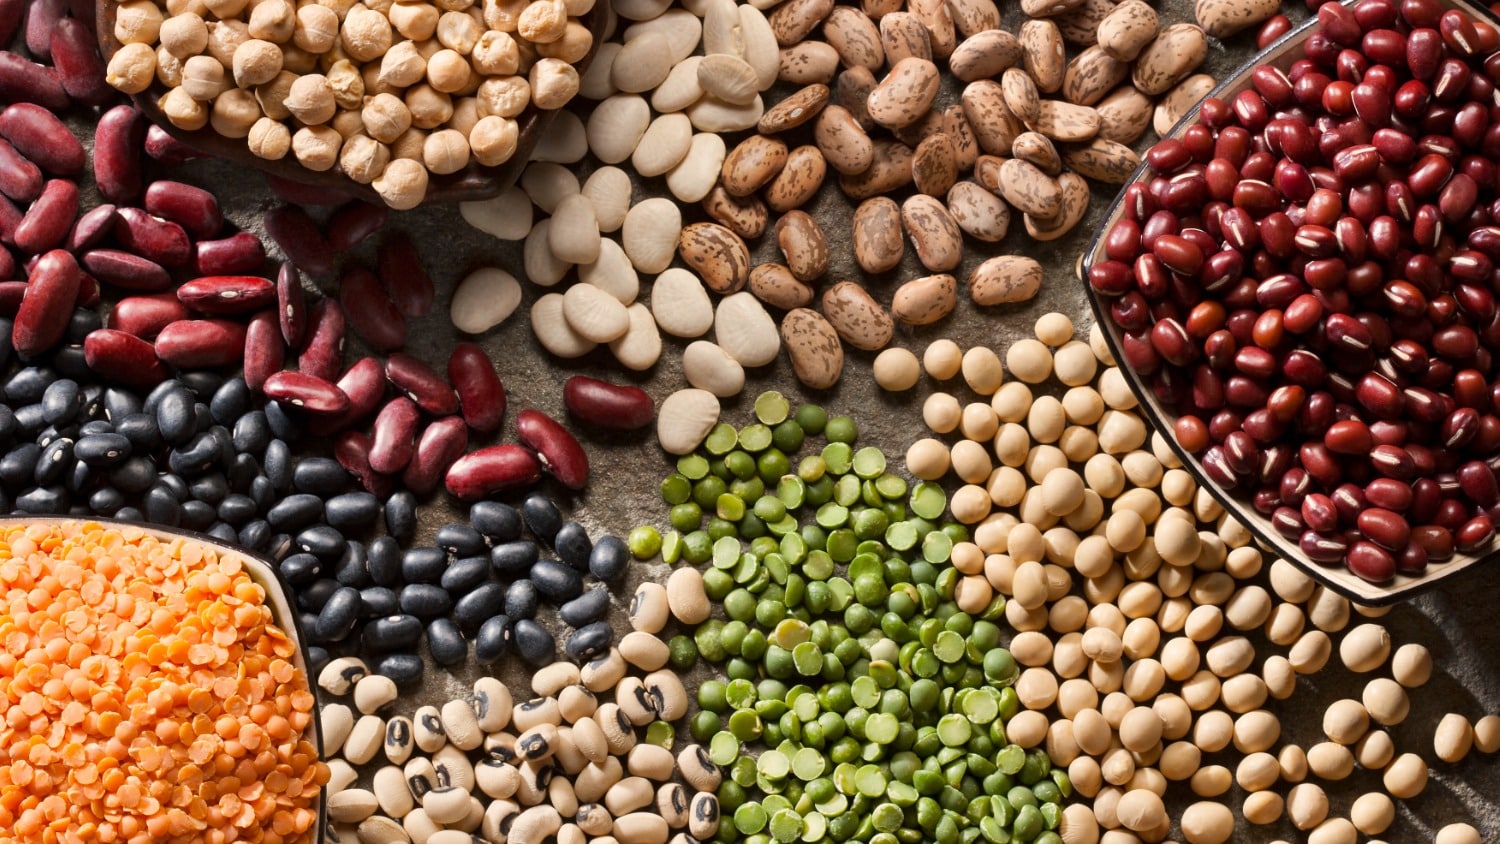 legumes pulses beans